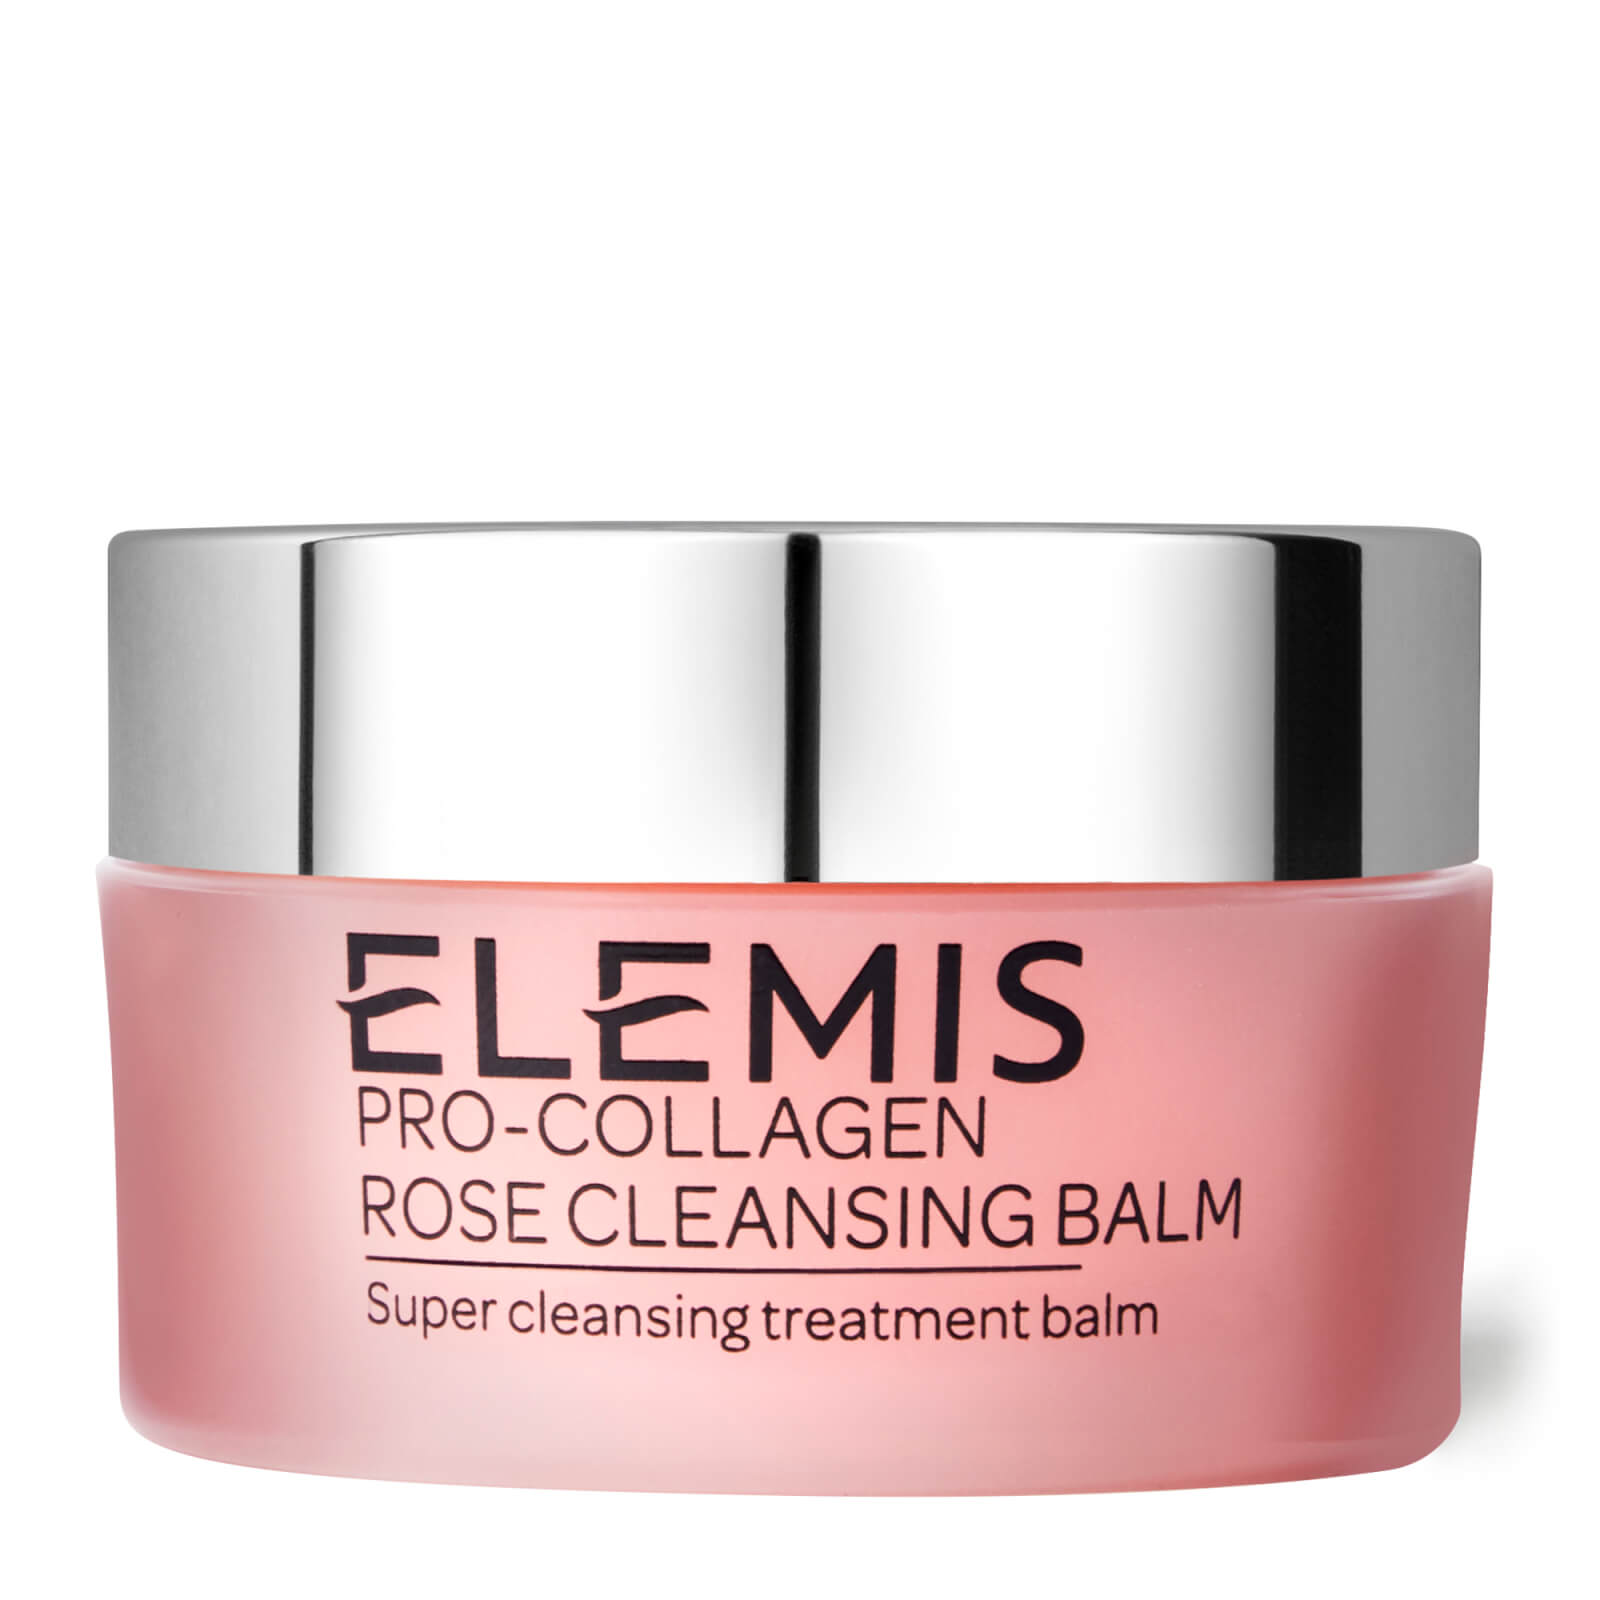 Elemis Pro-Collagen Rose Cleansing Balm 20g